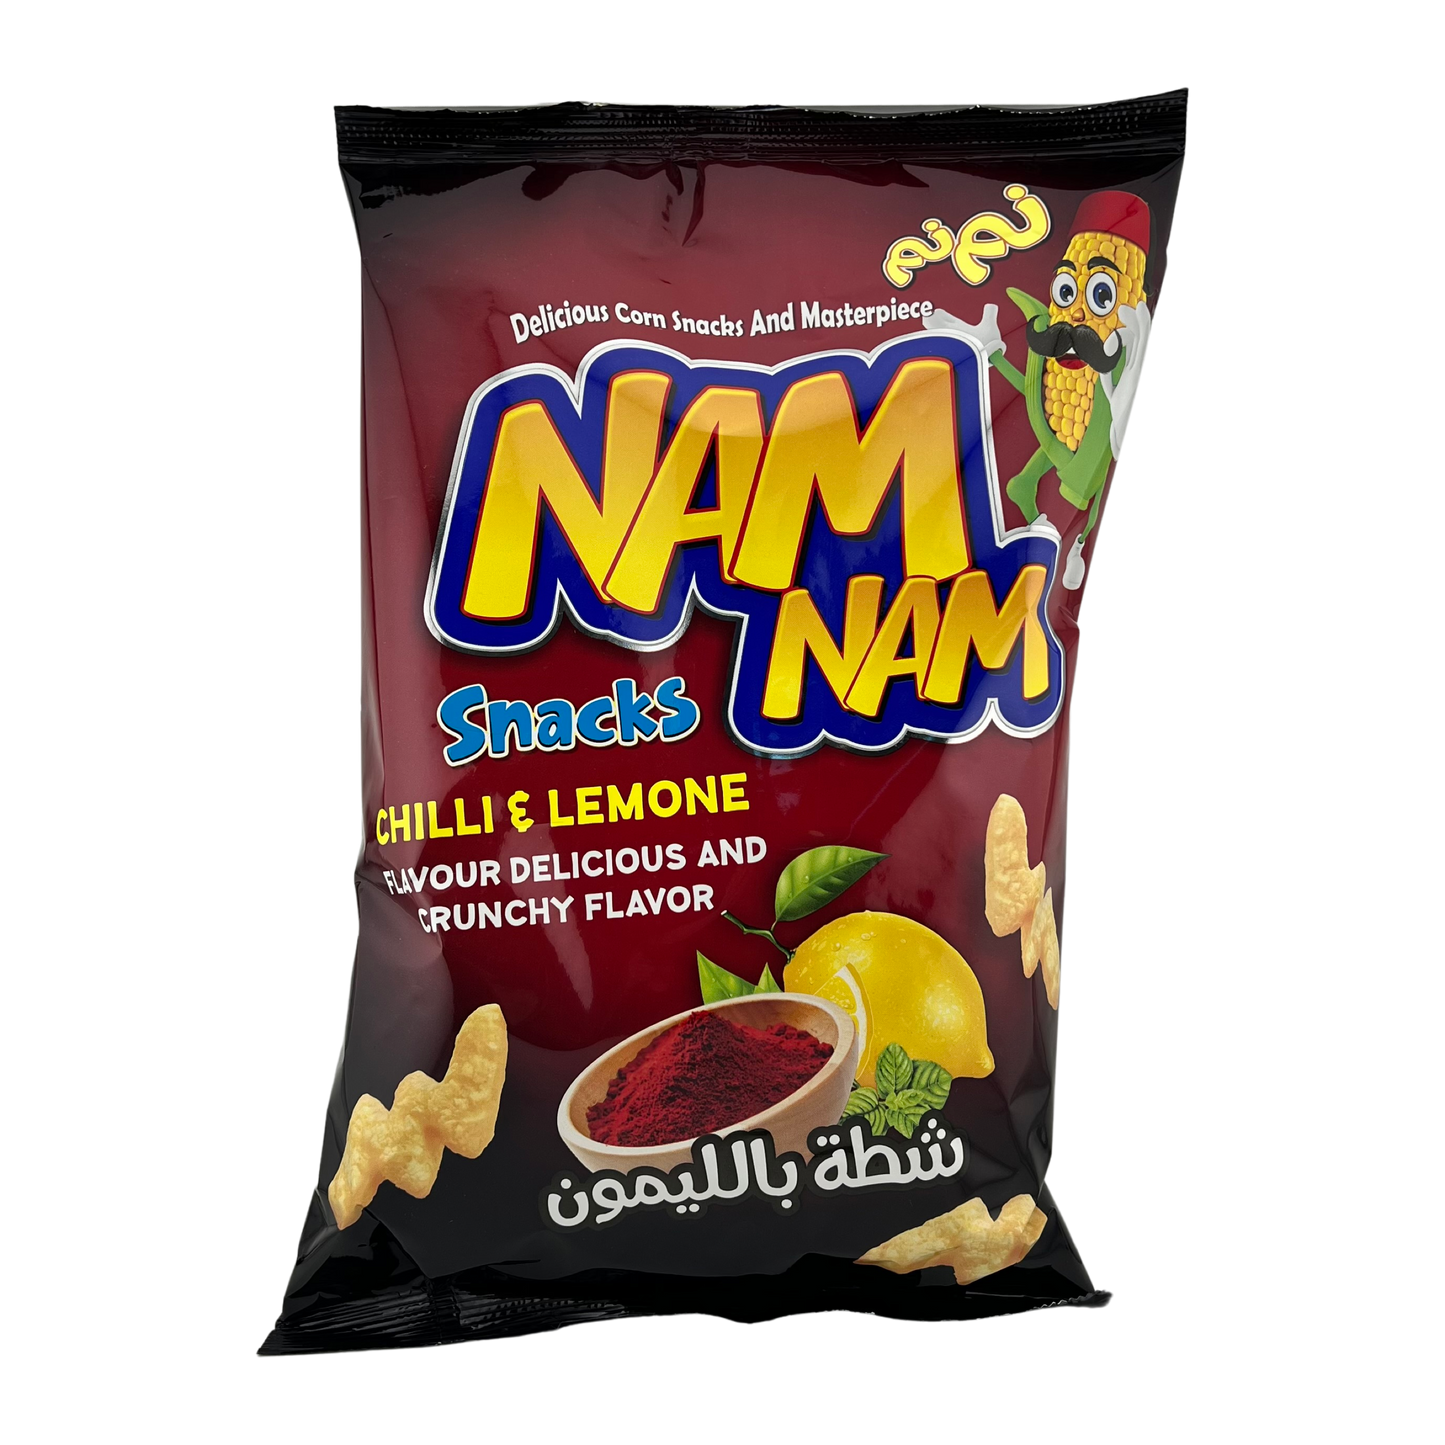 Nam Nam Puffs Chilli Lemon Chips 140g Damaski